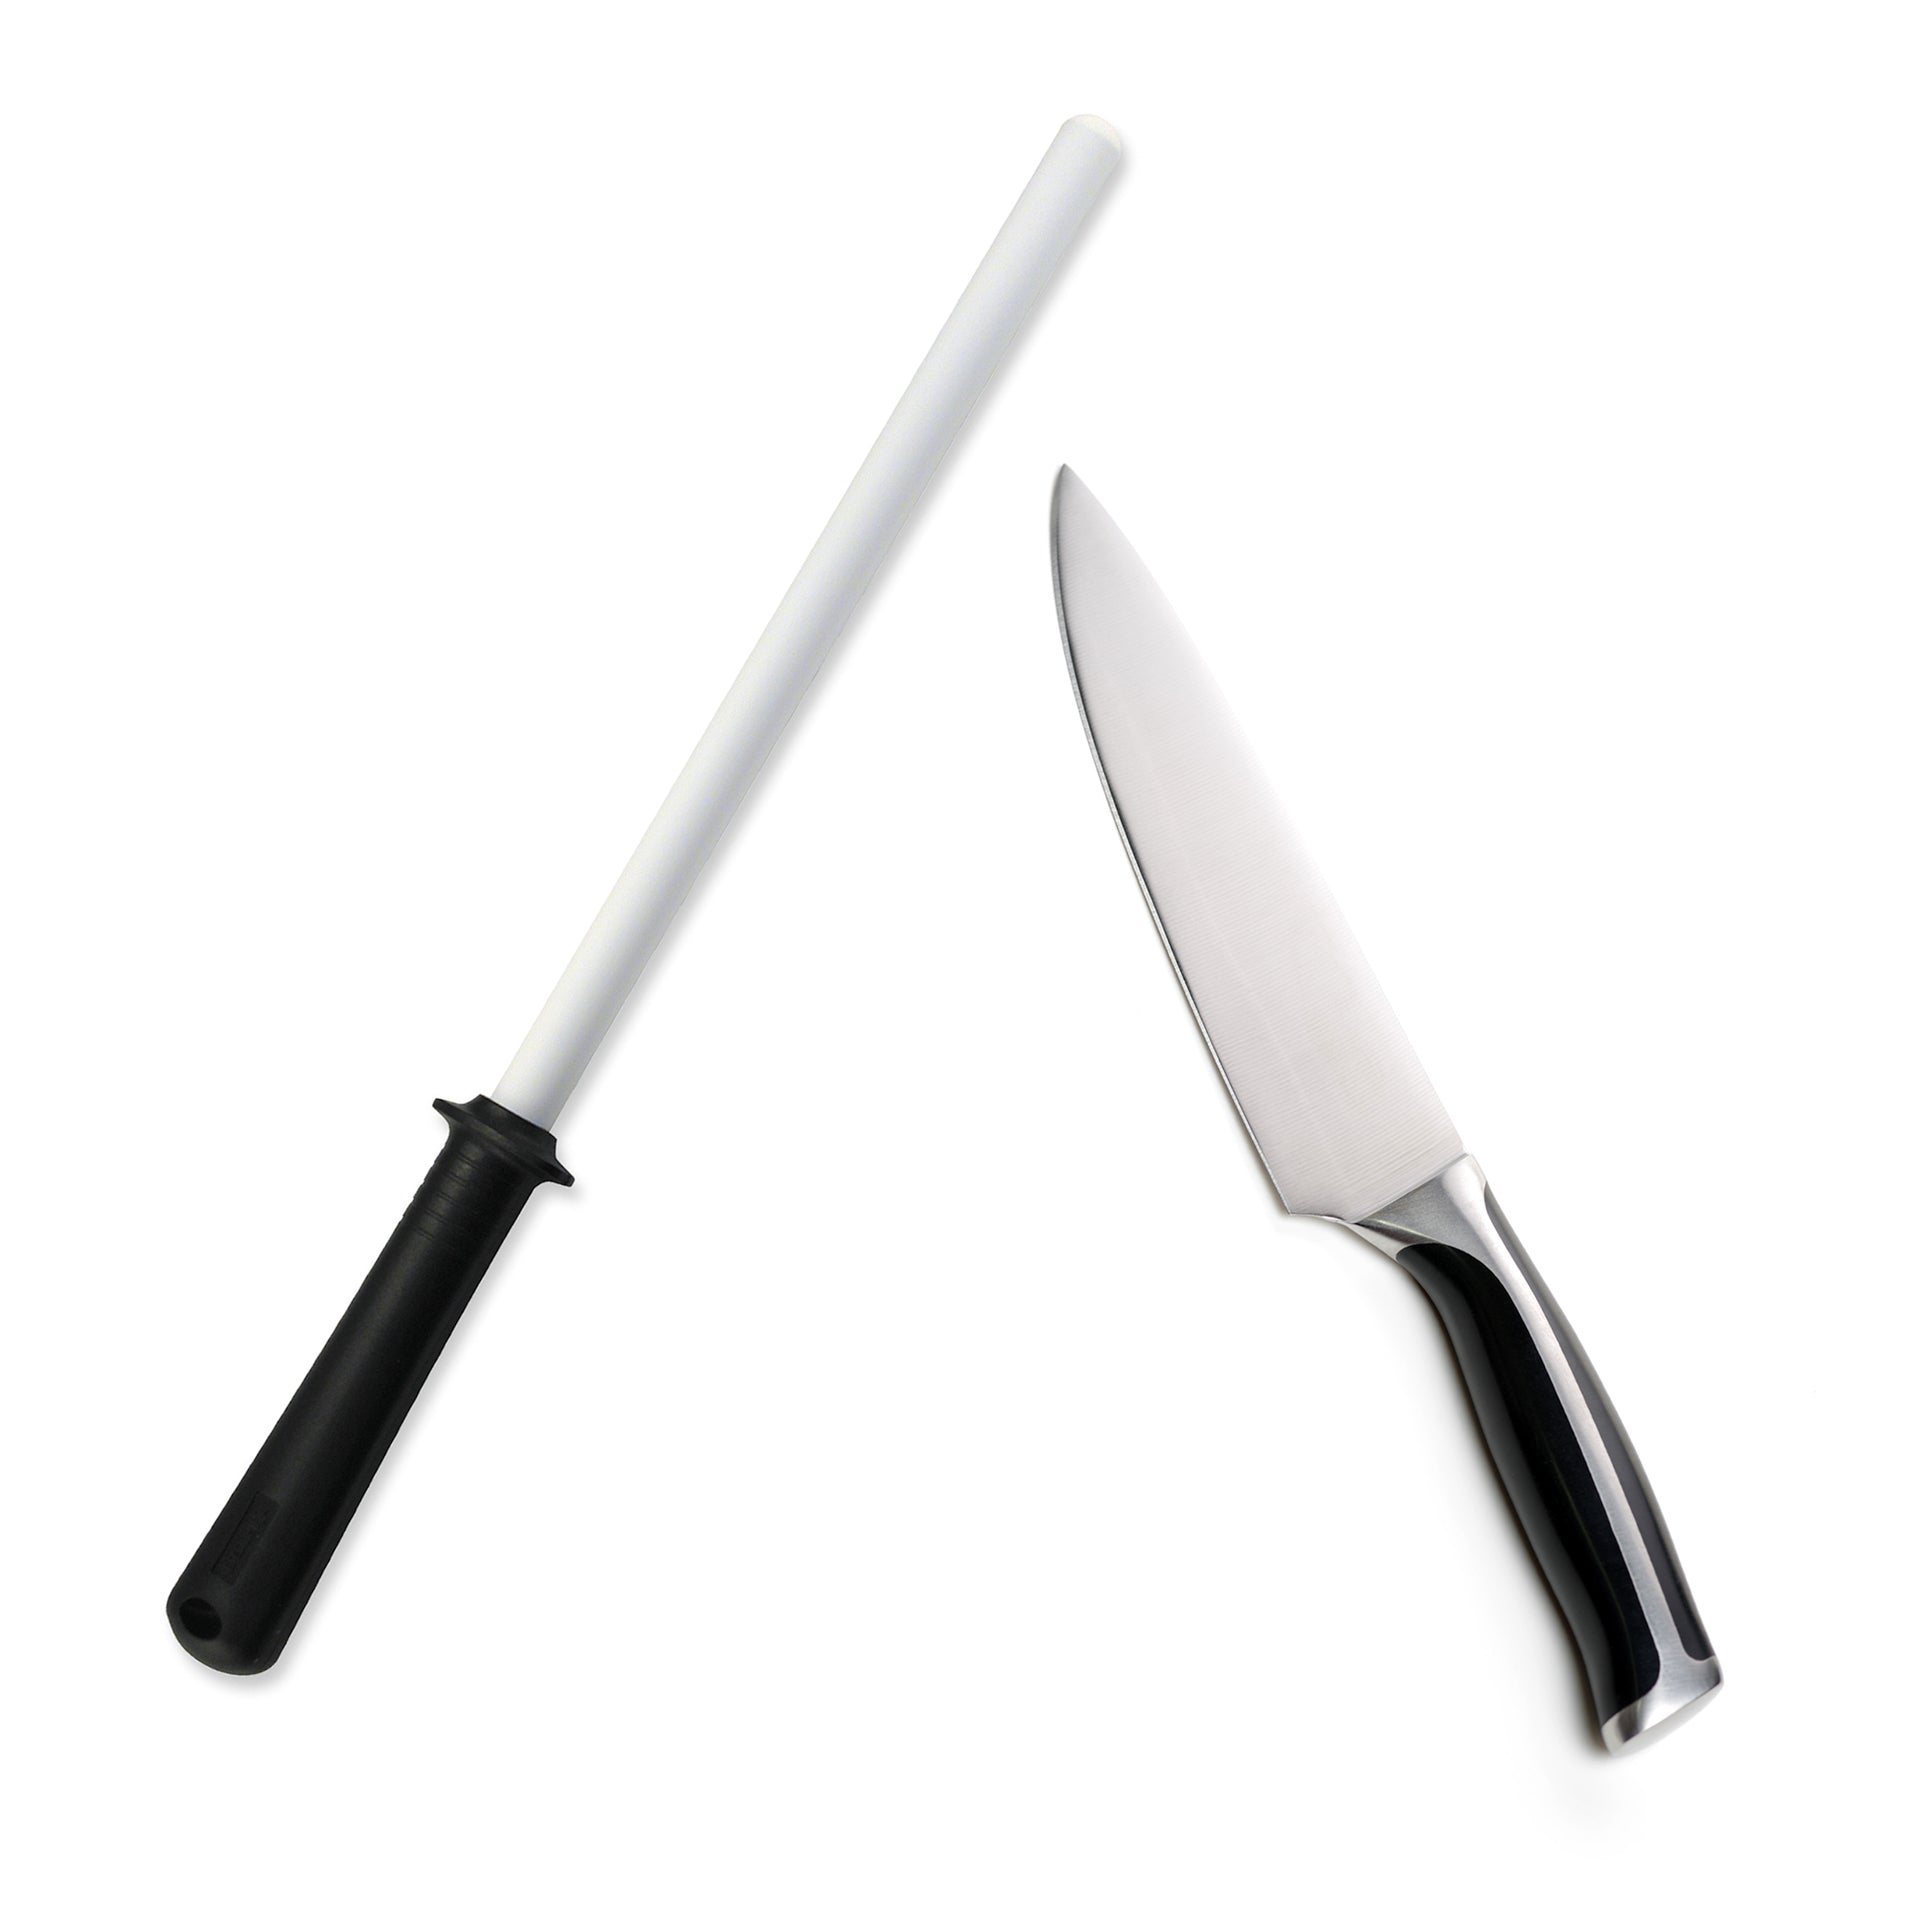 Knife Care Sharpening & Maintenance Do's & Don'ts - Town Cutler